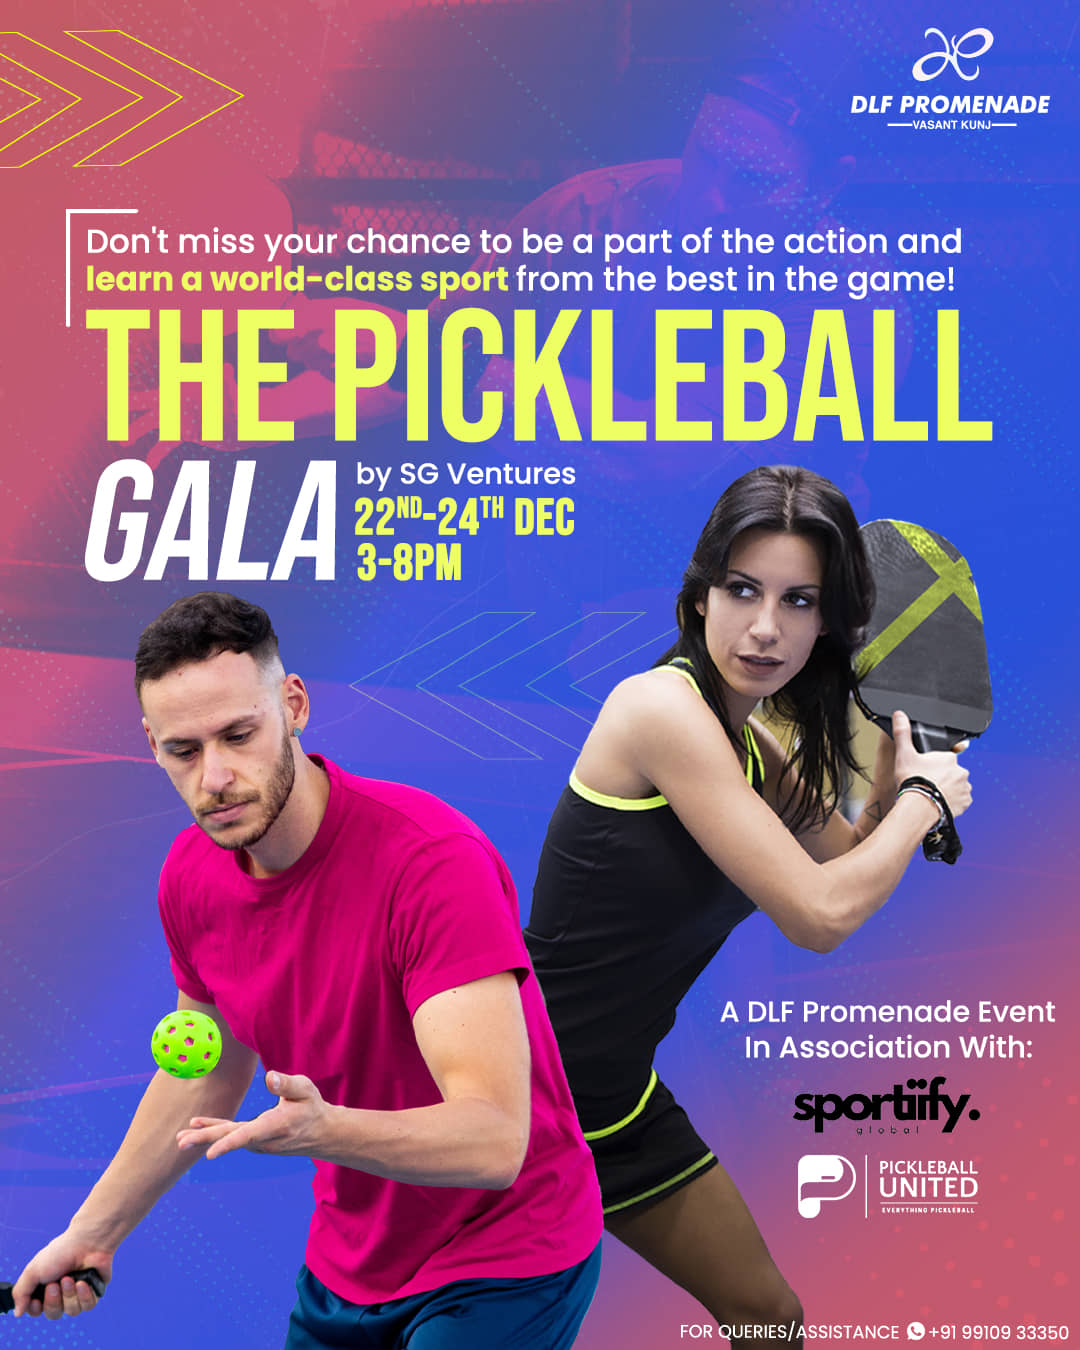 Pickleball Gala by SG Ventures at DLF Promenade